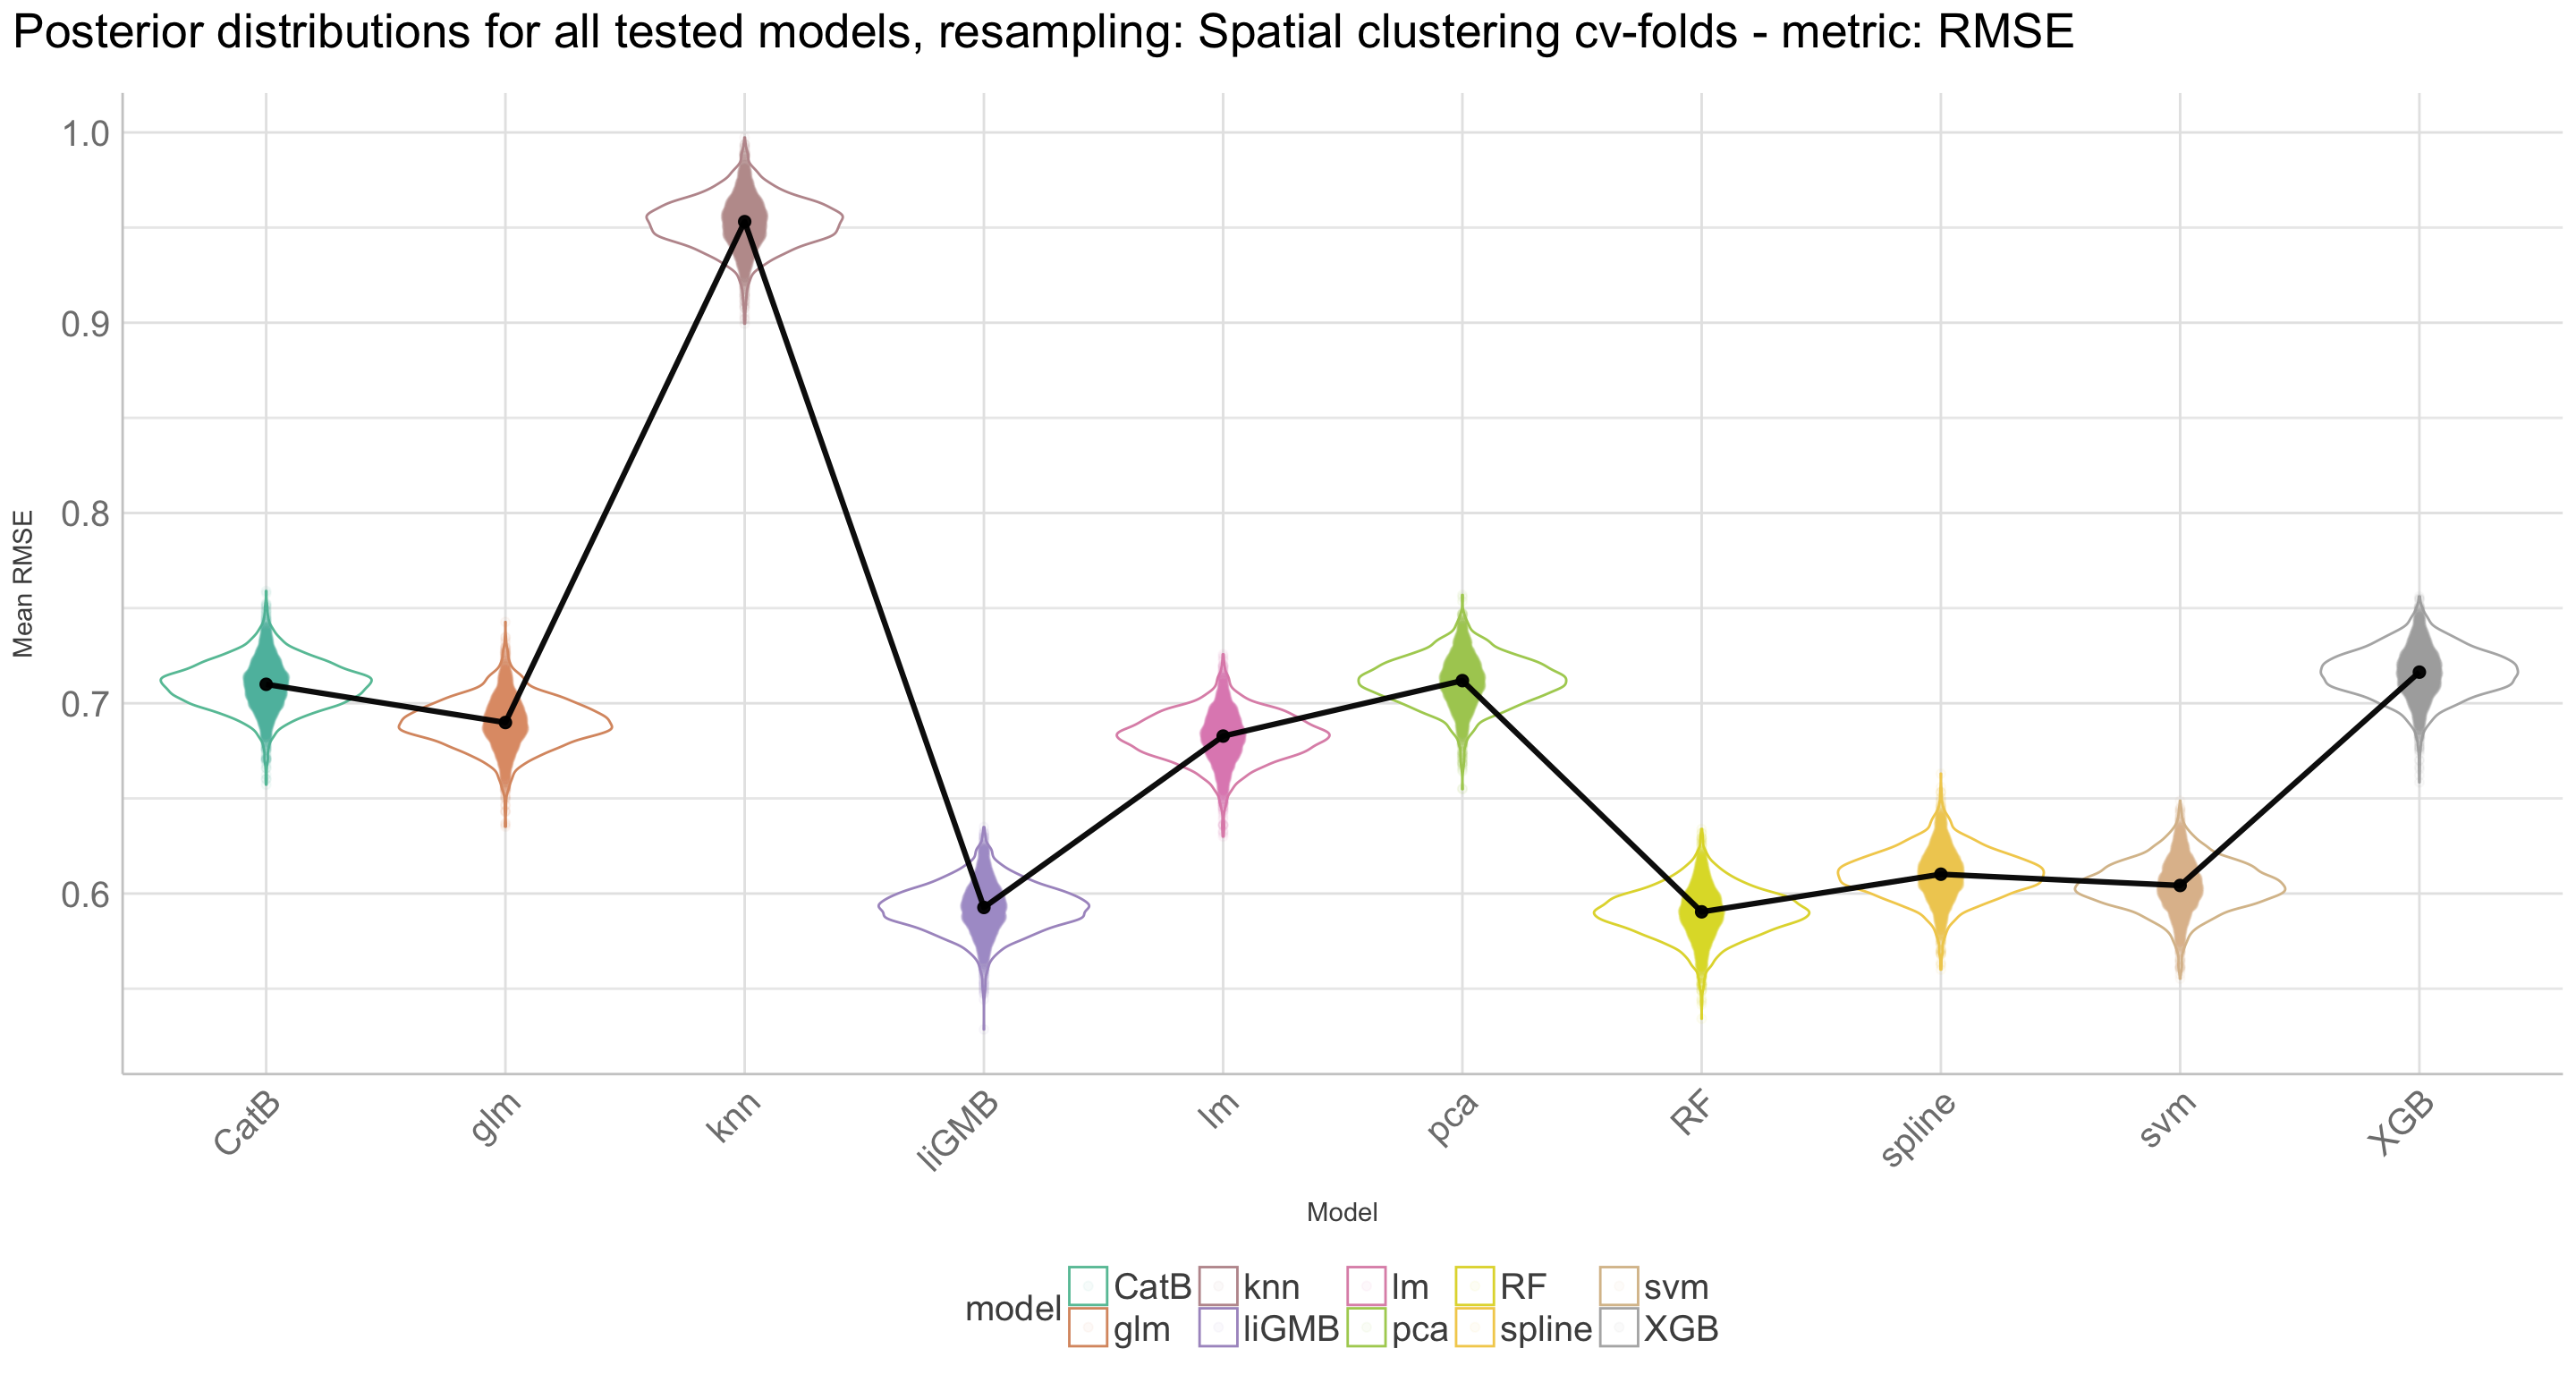 Posterior distributions for all tested models, resampling: Normal cv-folds - metric: RMSE